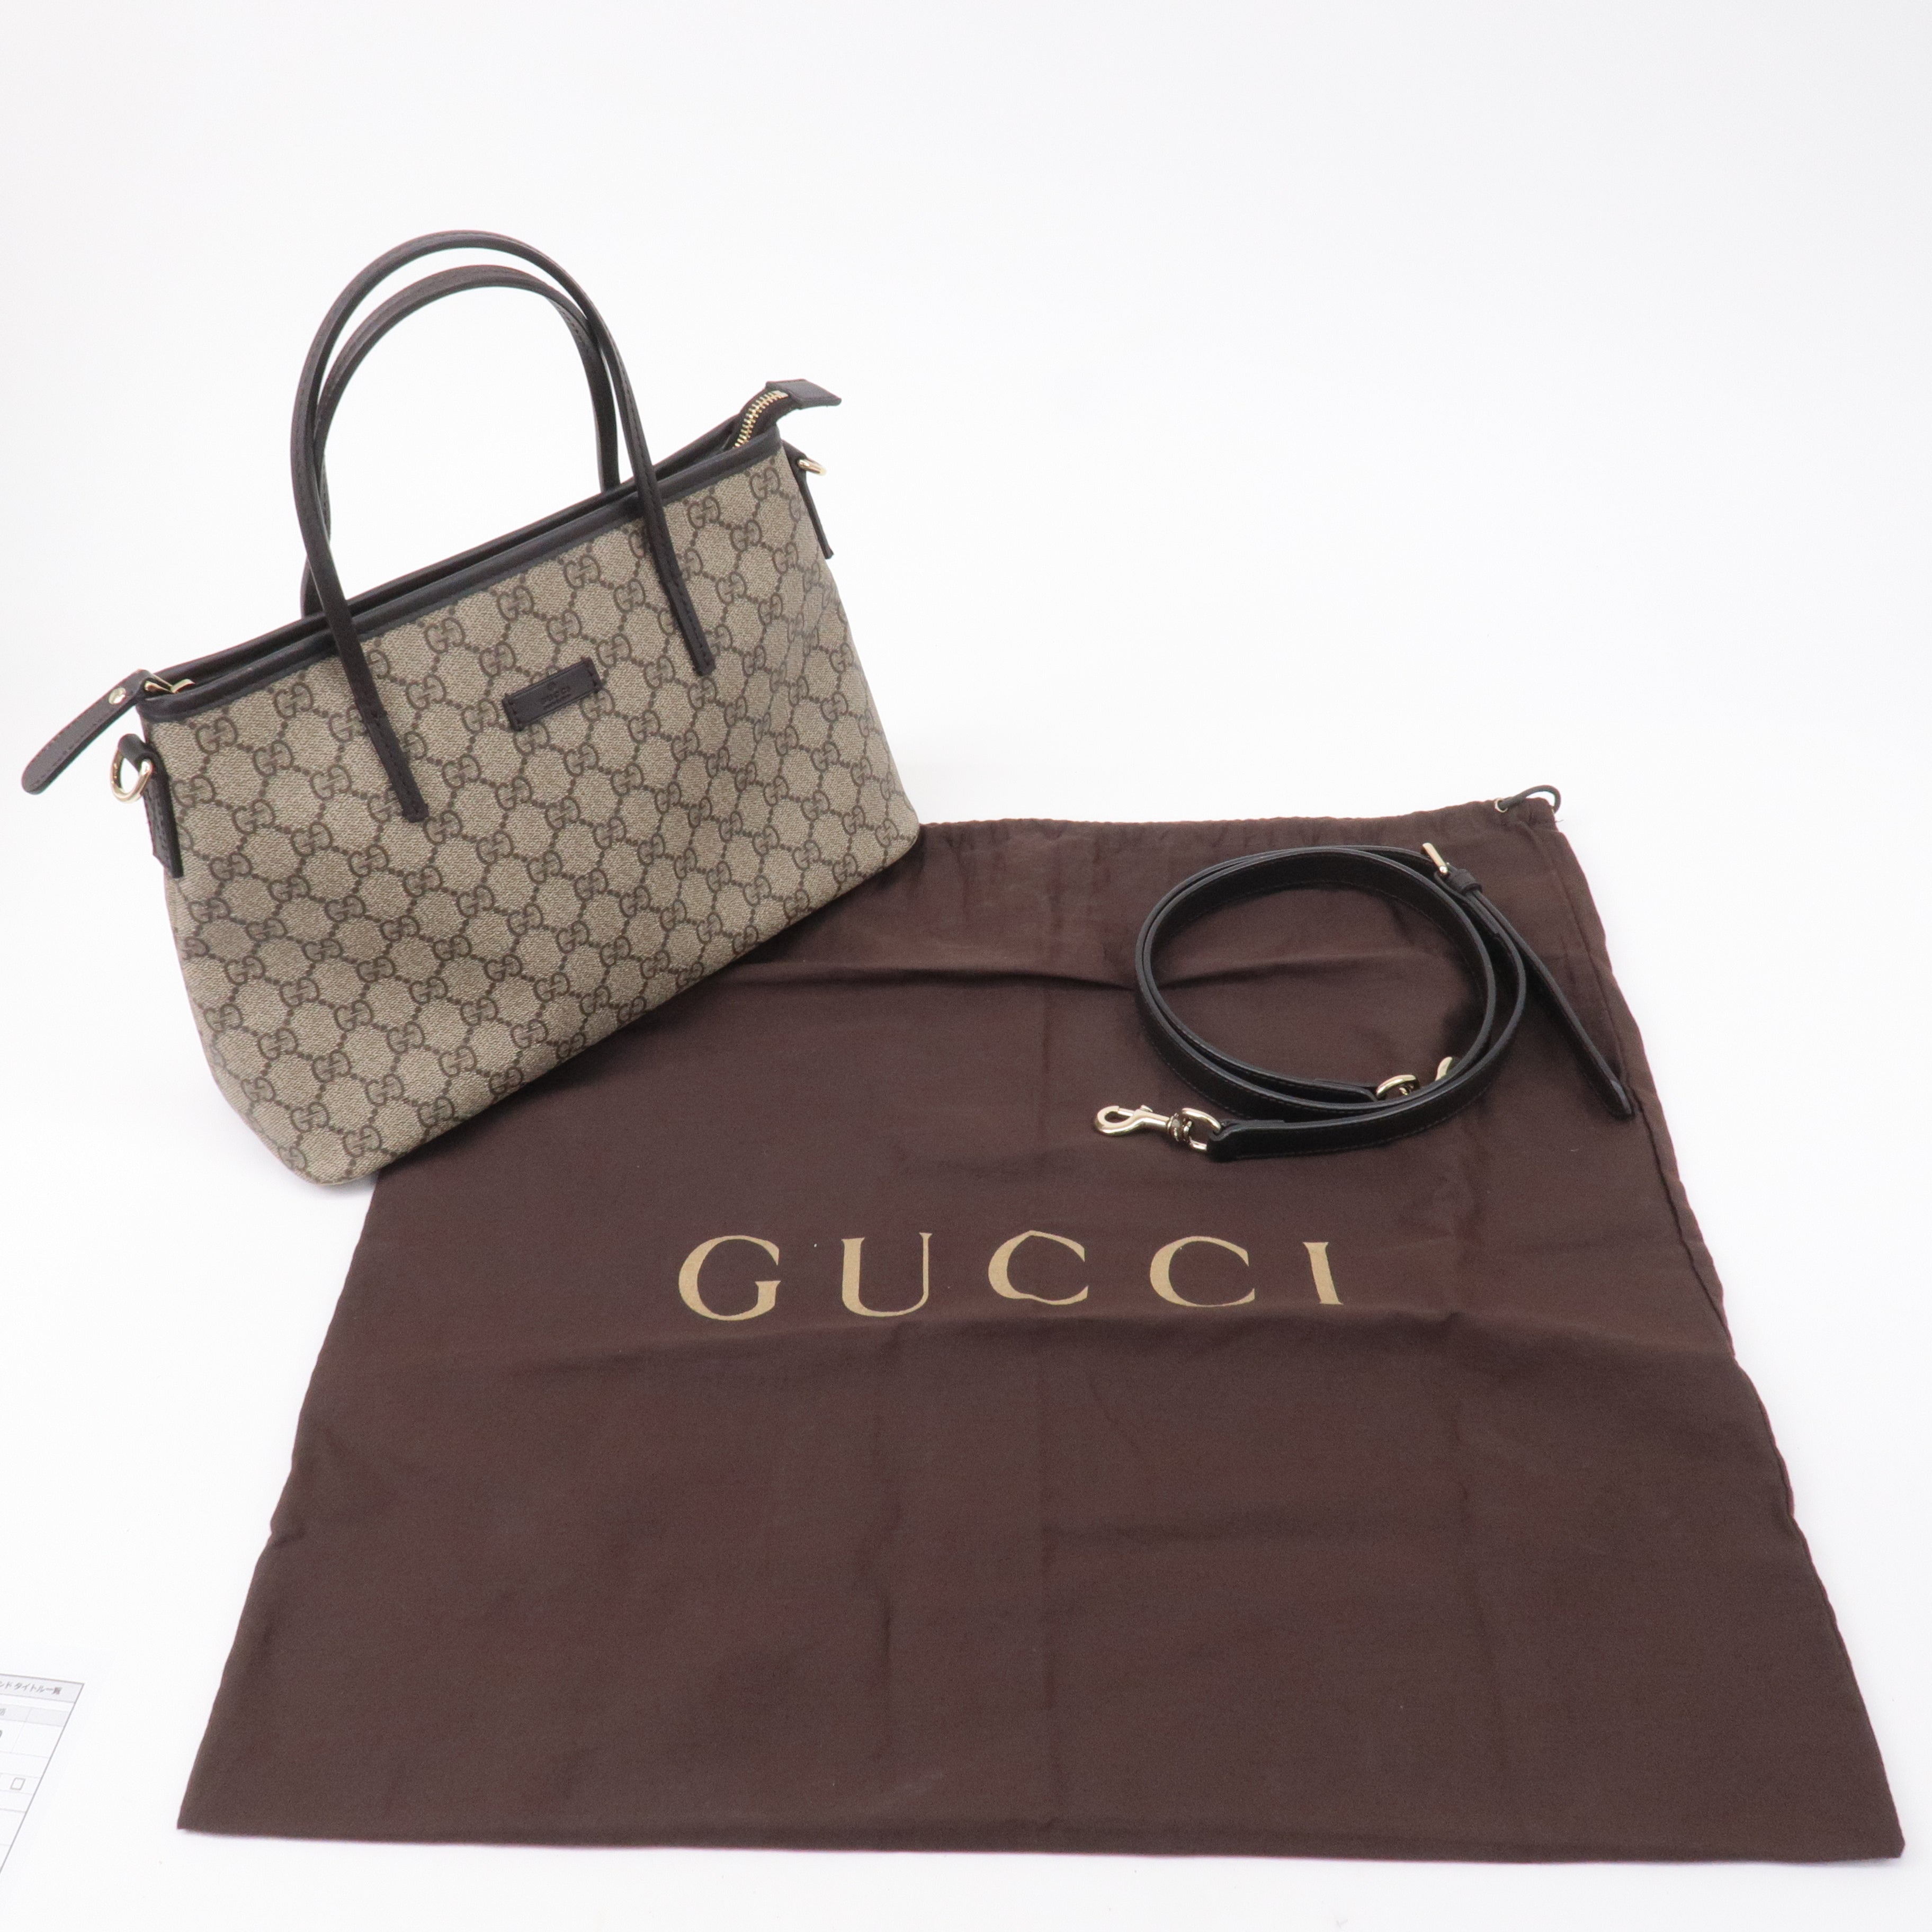 GUCCI-GG-Supreme-Leather-2Way-Bag-Hand-Bag-Beige-Brown-353440